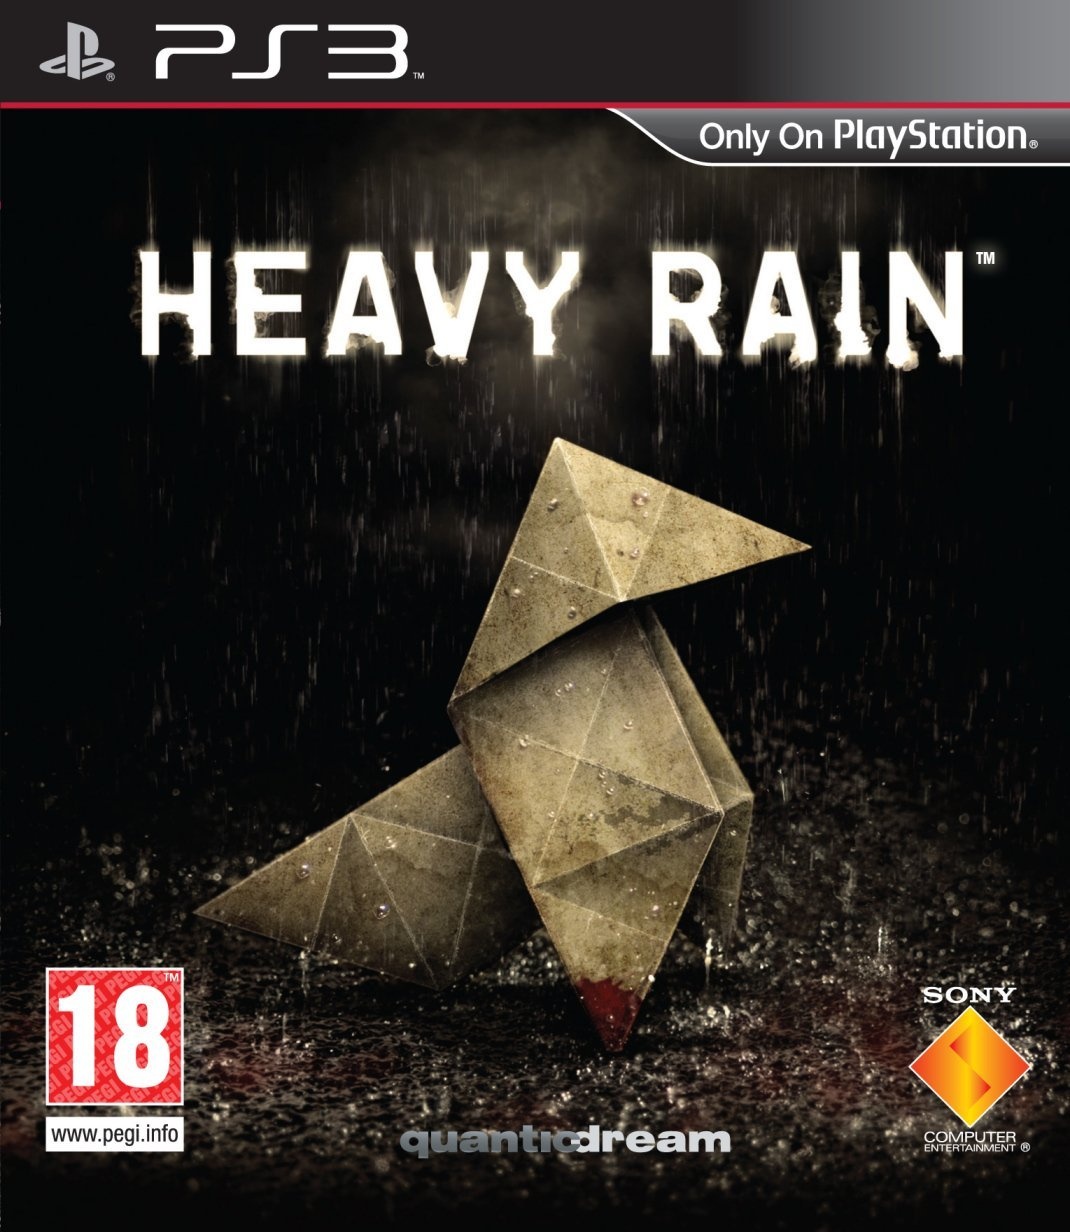 Heavy rain game pc